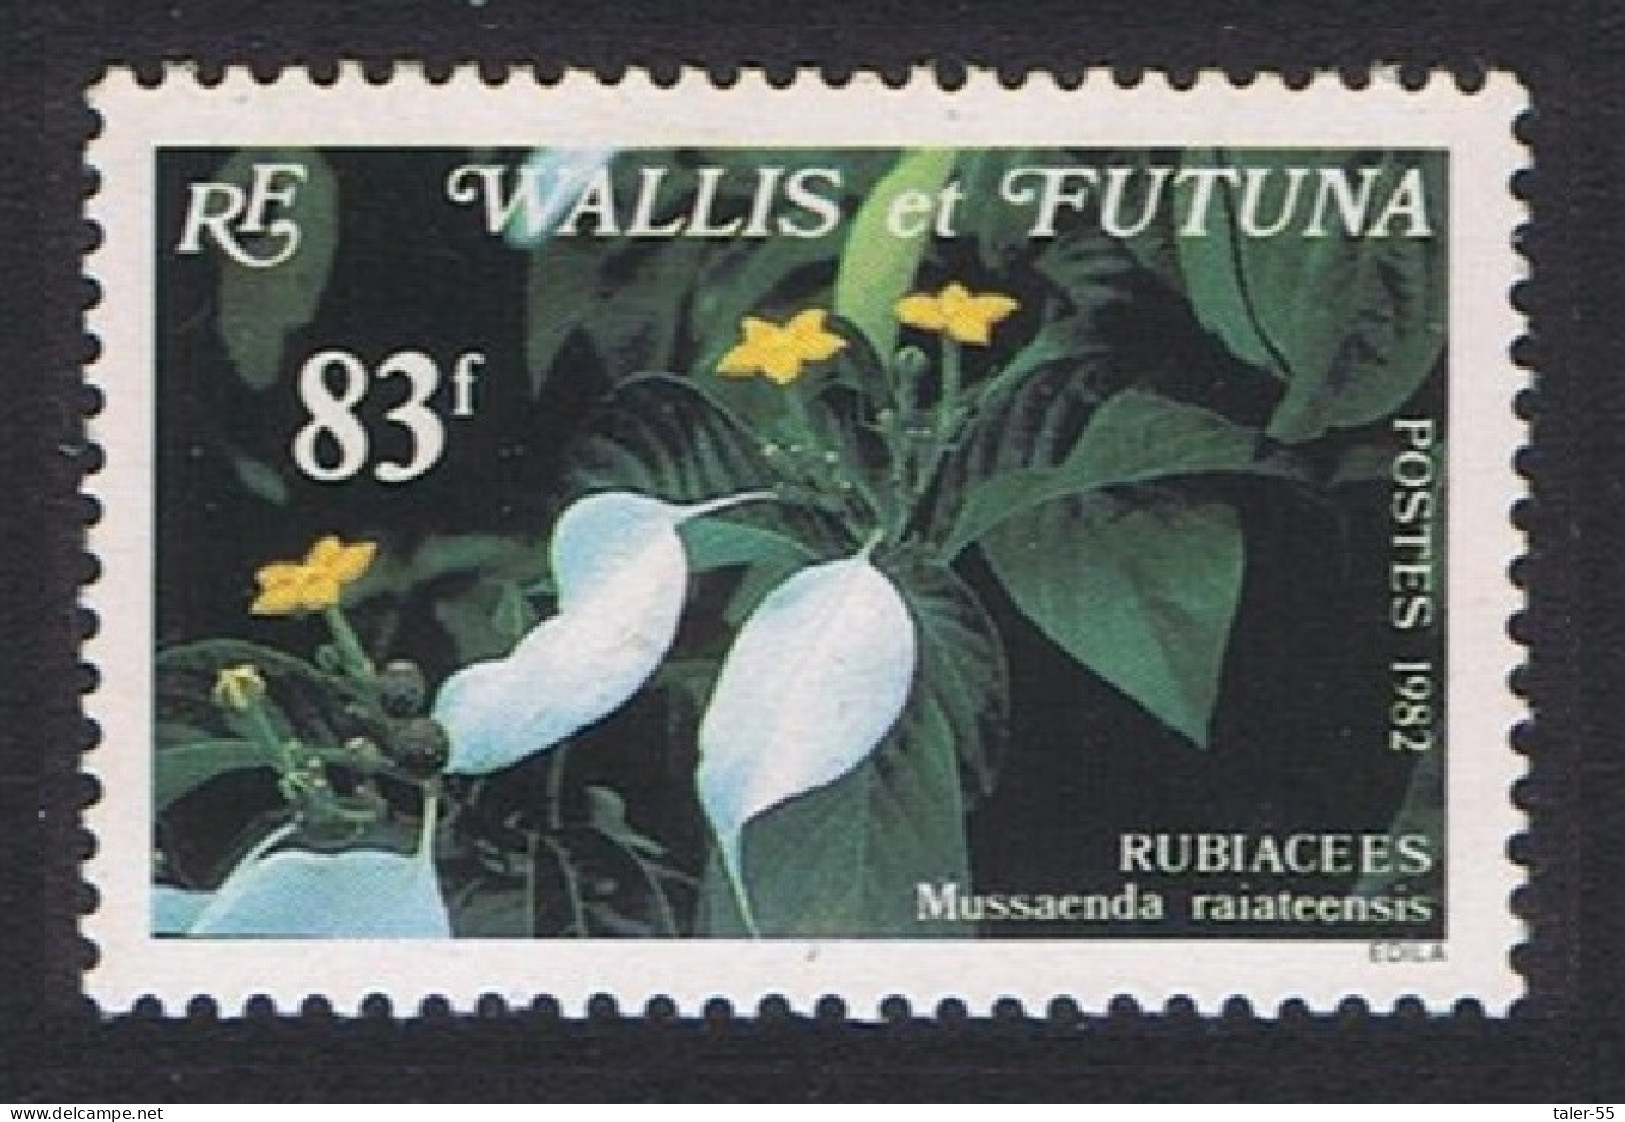 Wallis And Futuna Orchids Mussaenda Raiateensis 83f 1982 MNH SG#399 Sc#286 - Neufs